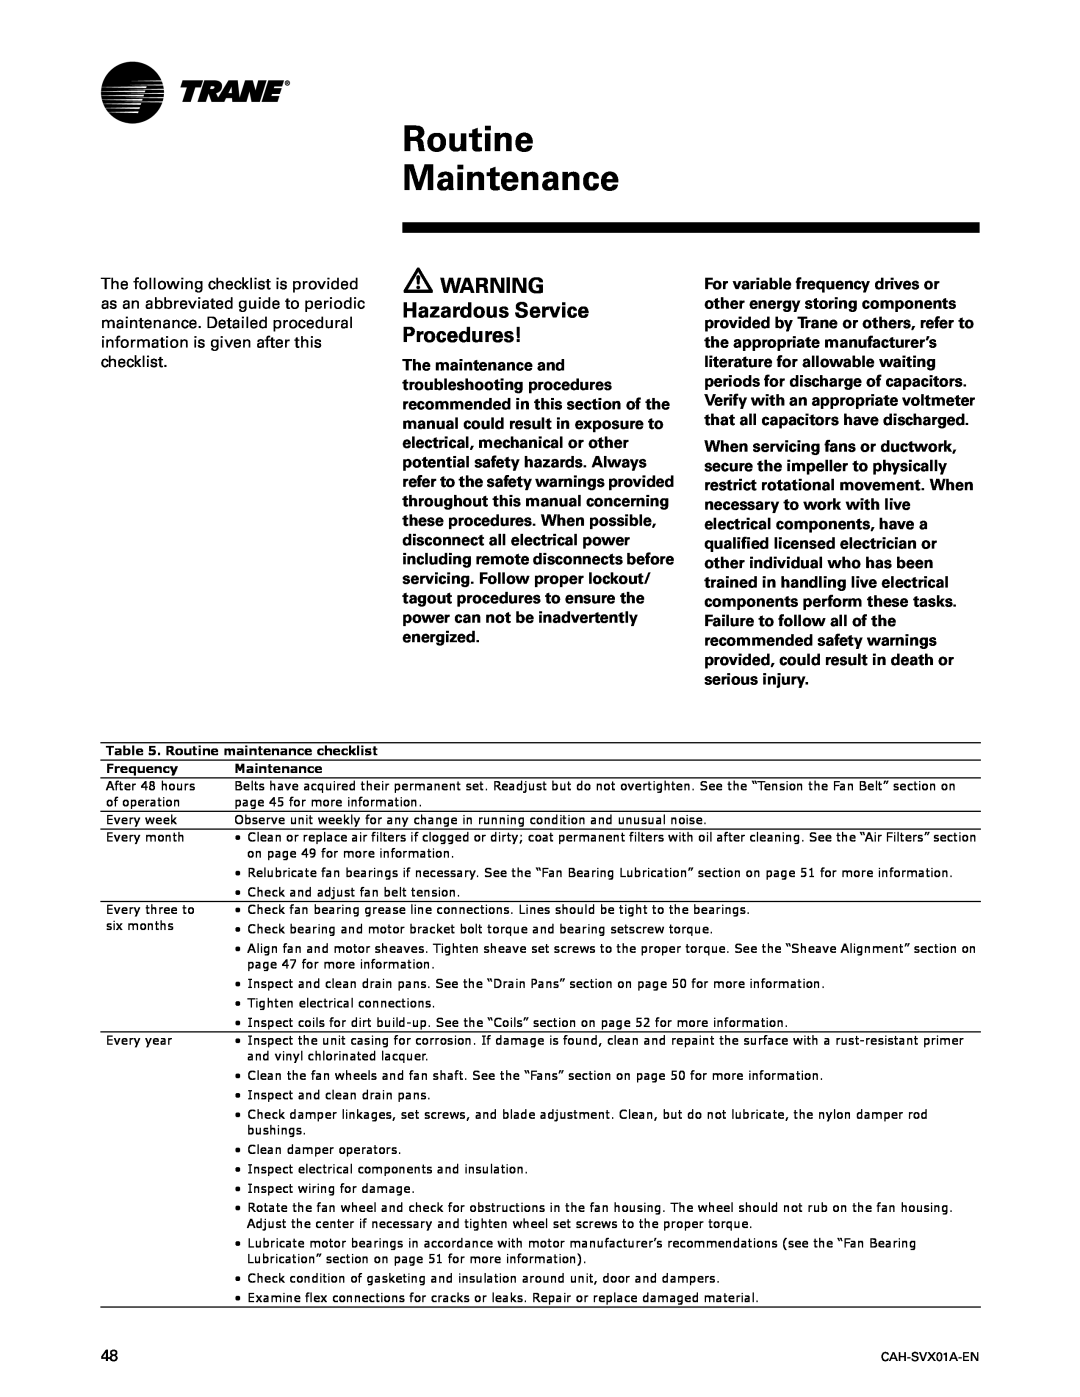 Trane CAH-SVX01A-EN, Custom Climate Changer Air Handlers manual Routine Maintenance, WARNING Hazardous Service Procedures 